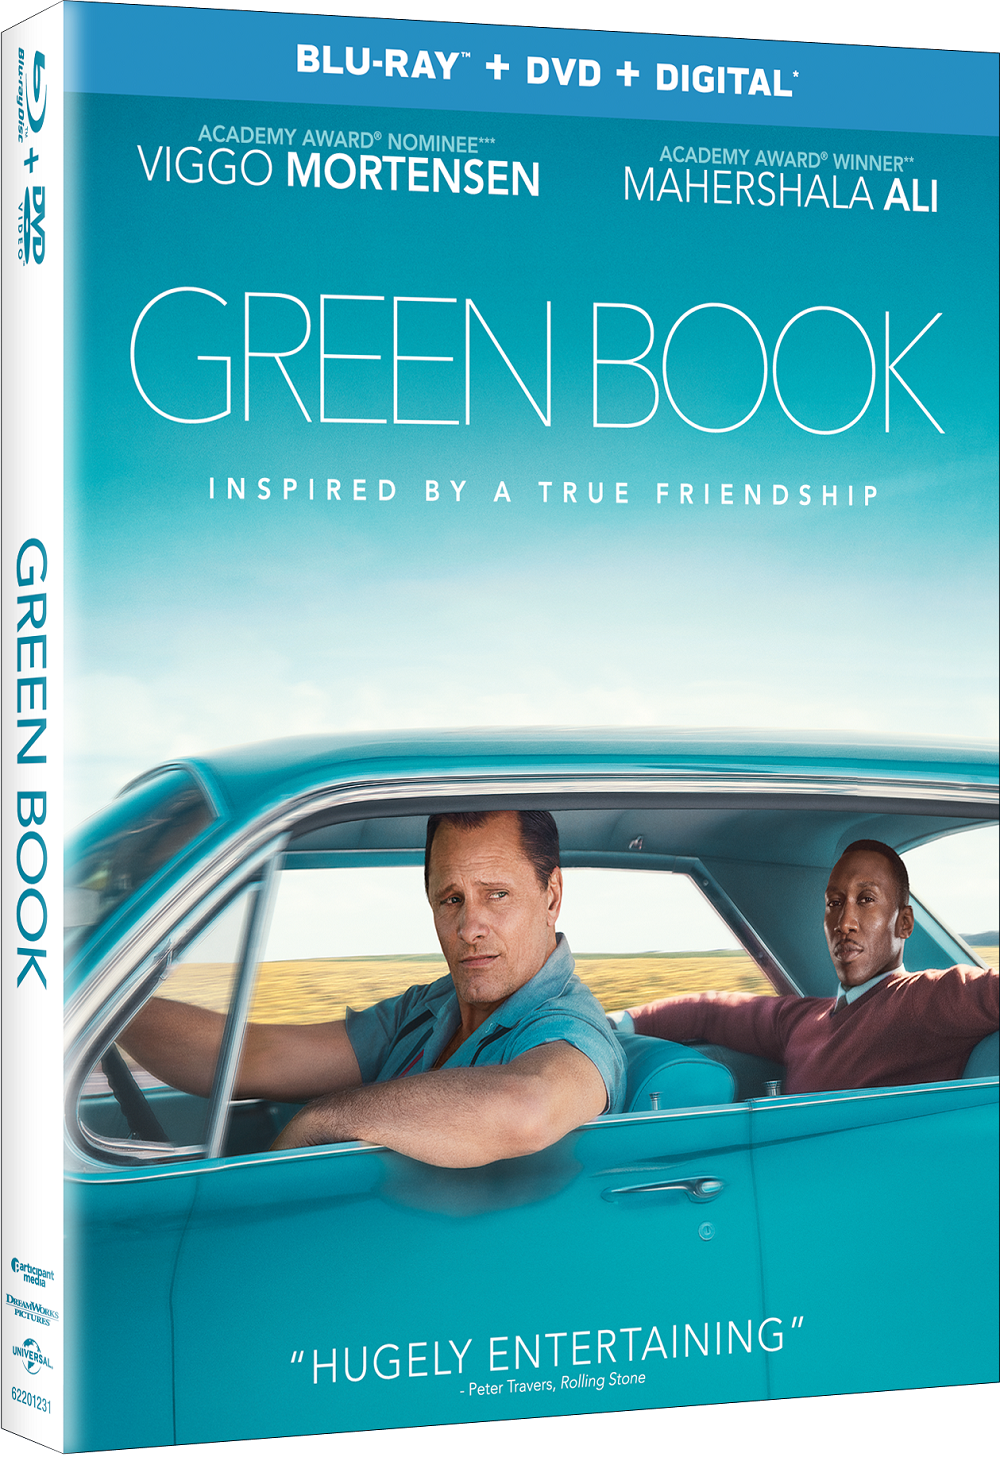 Green Book Blu-ray DVD Digital release